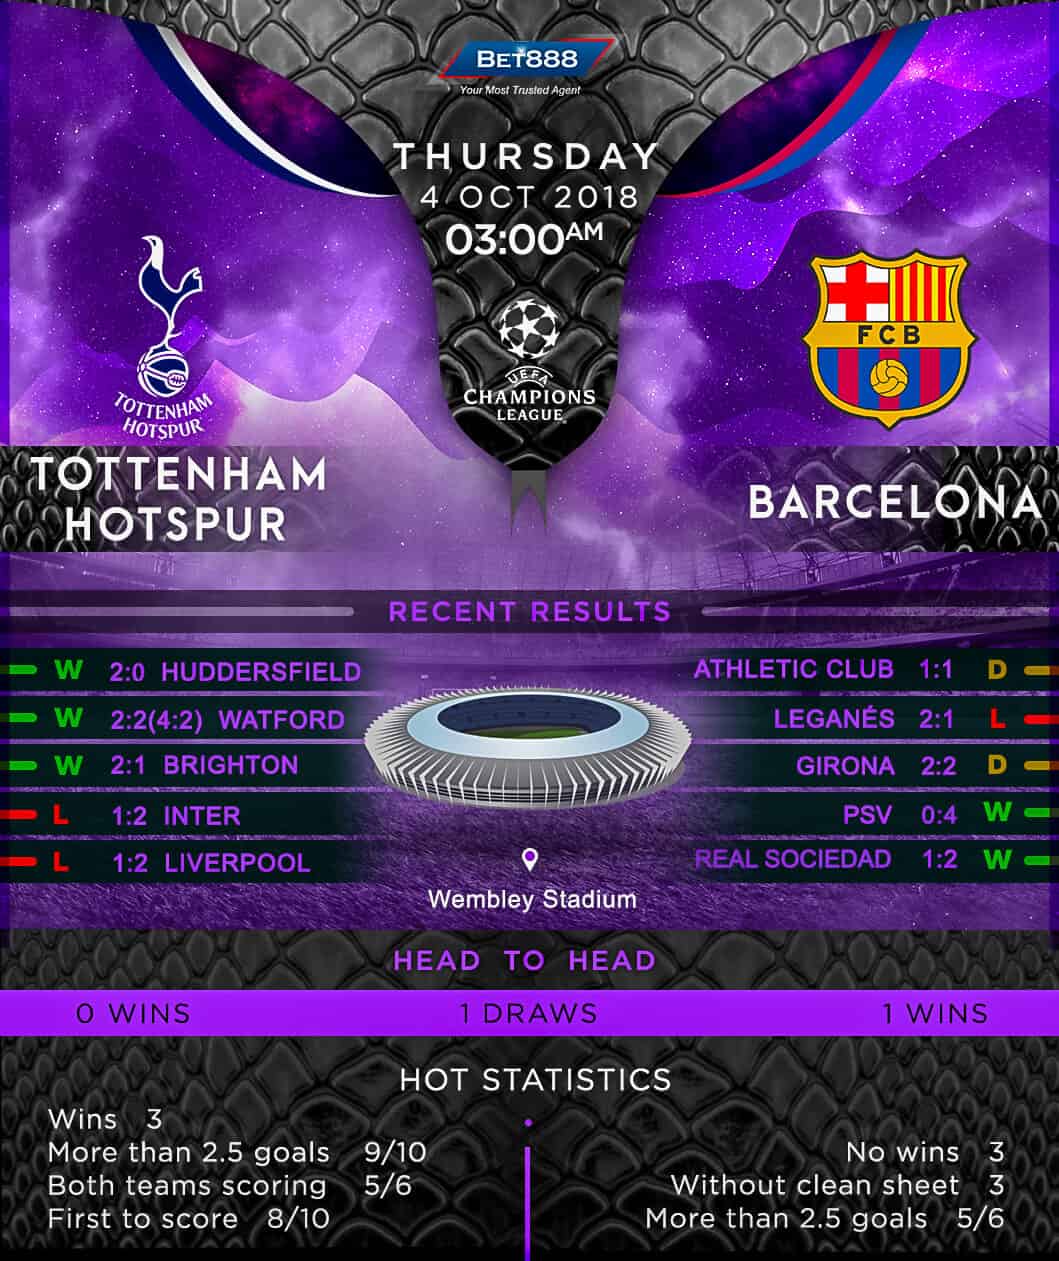 Tottenham Hotspur vs Barcelona 04/10/18